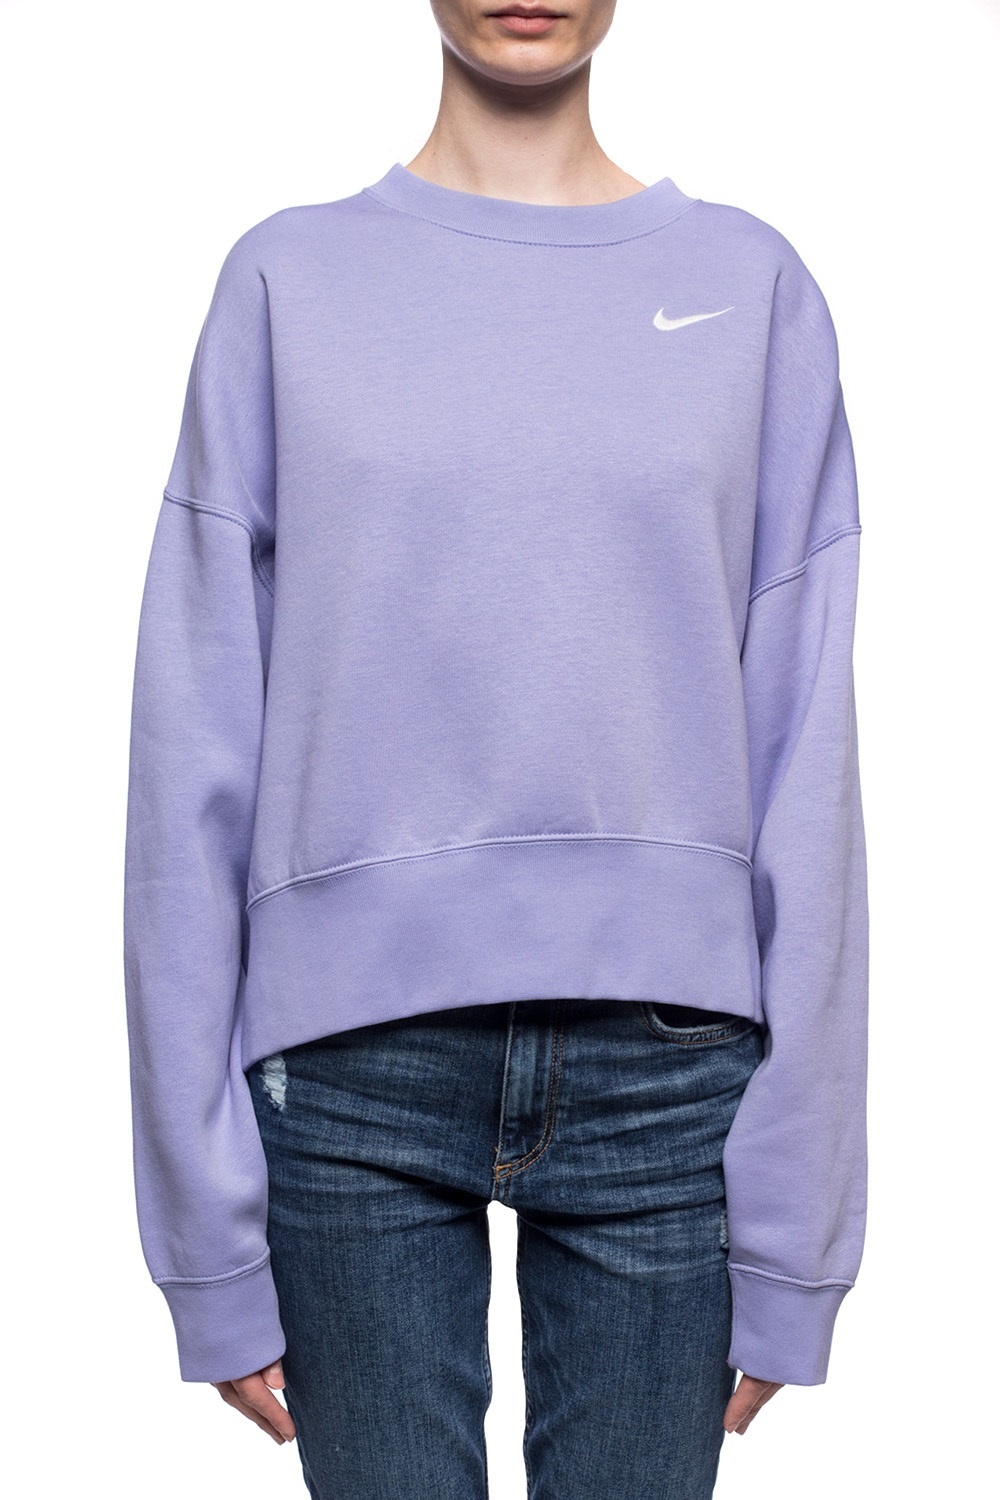 light purple sweatshirt nike